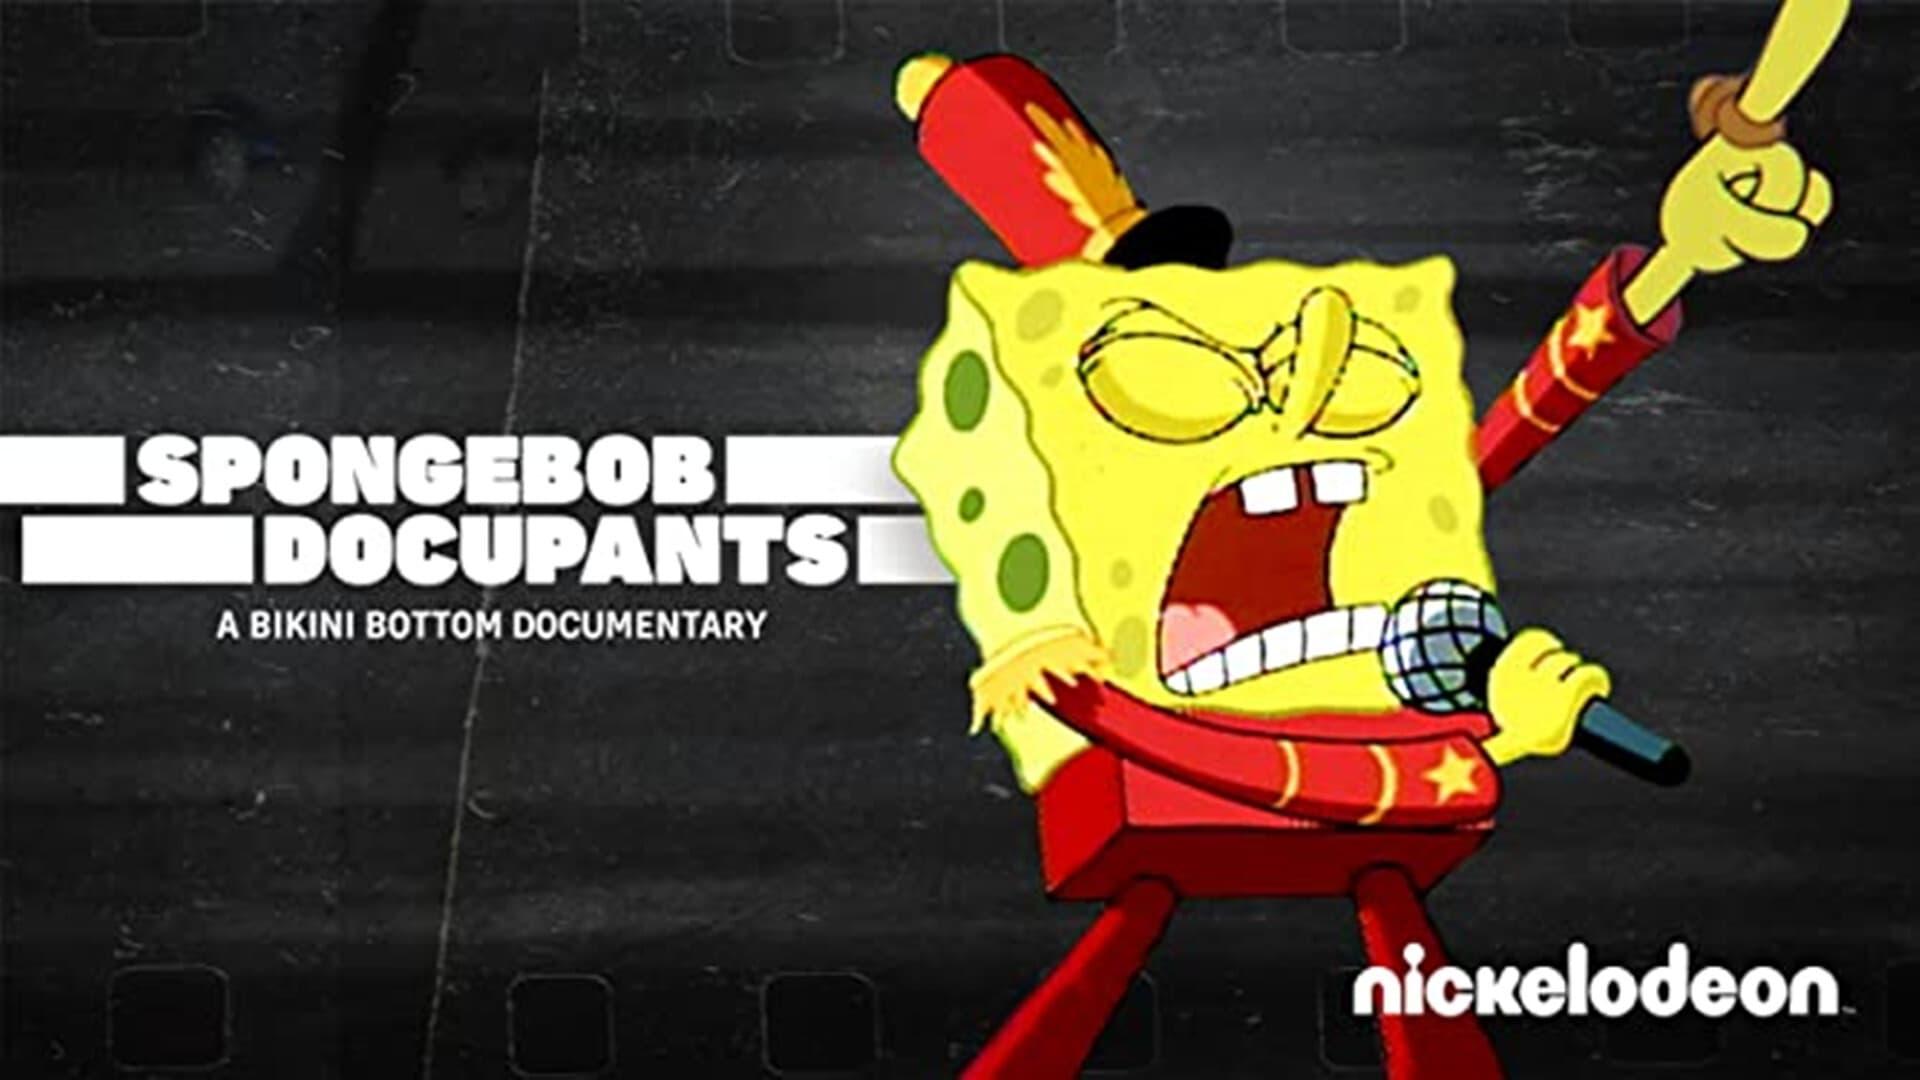 SpongeBob DocuPants backdrop